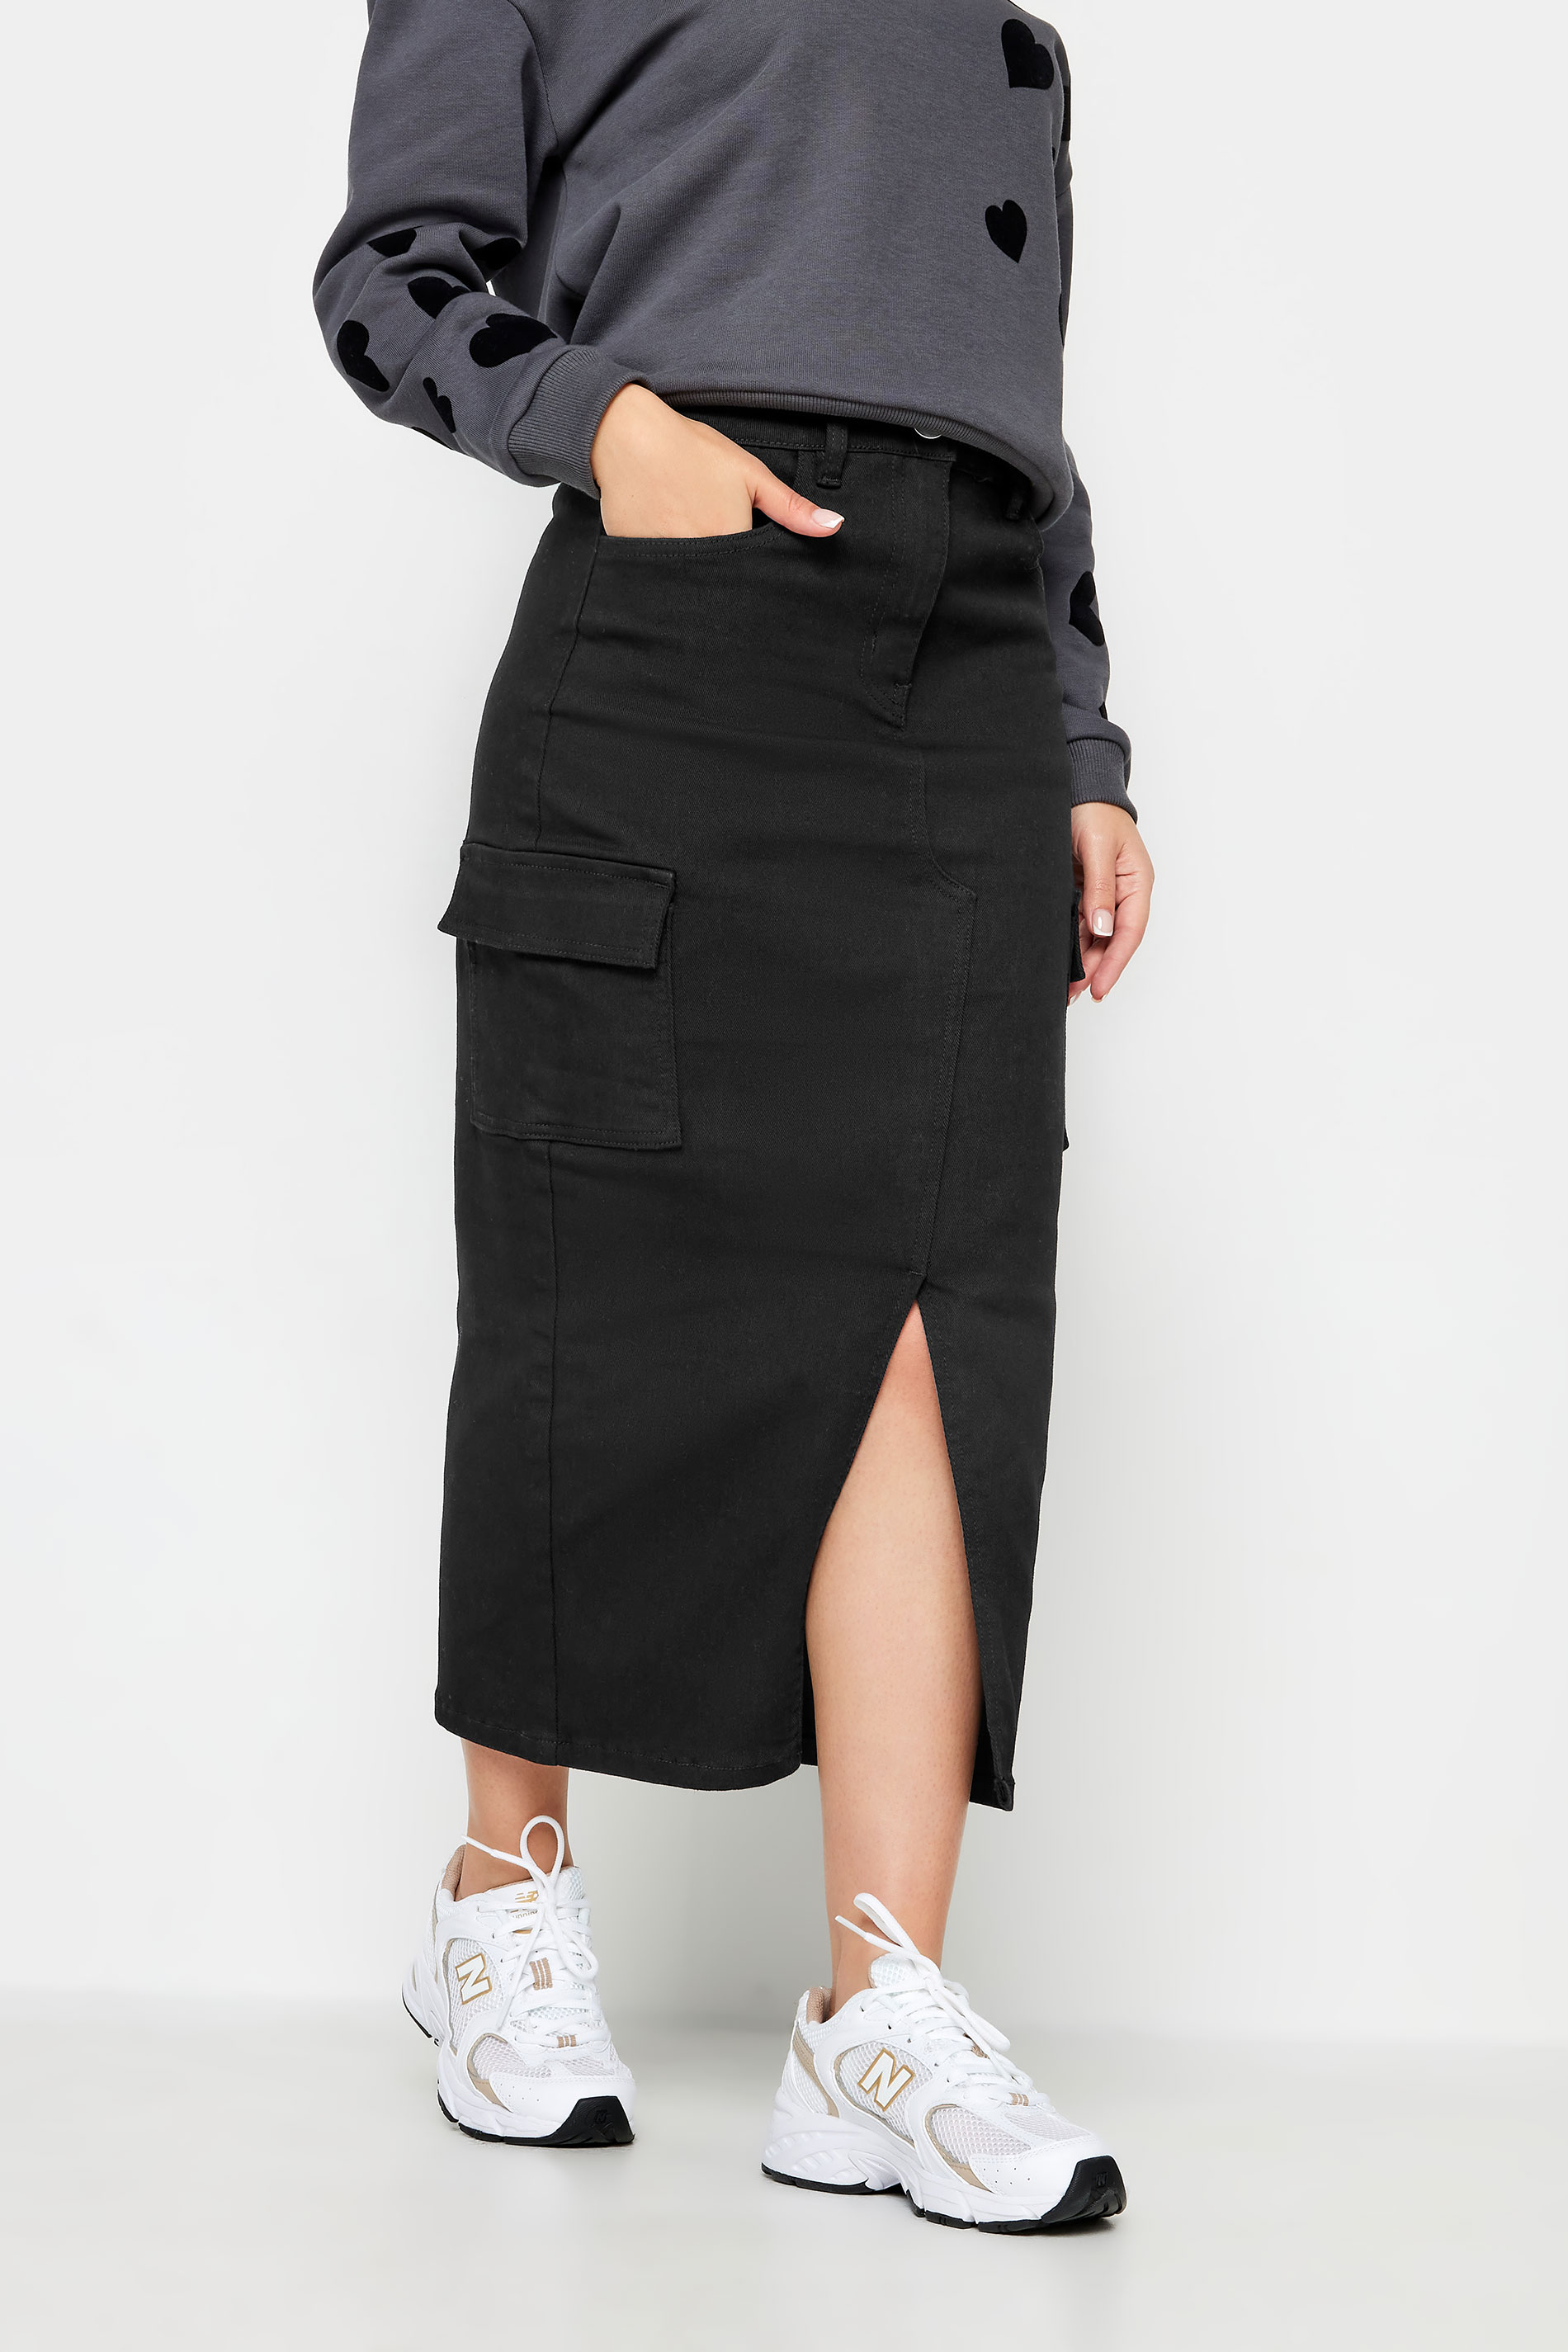 PixieGirl Black Utility Midi Skirt | PixieGirl  1